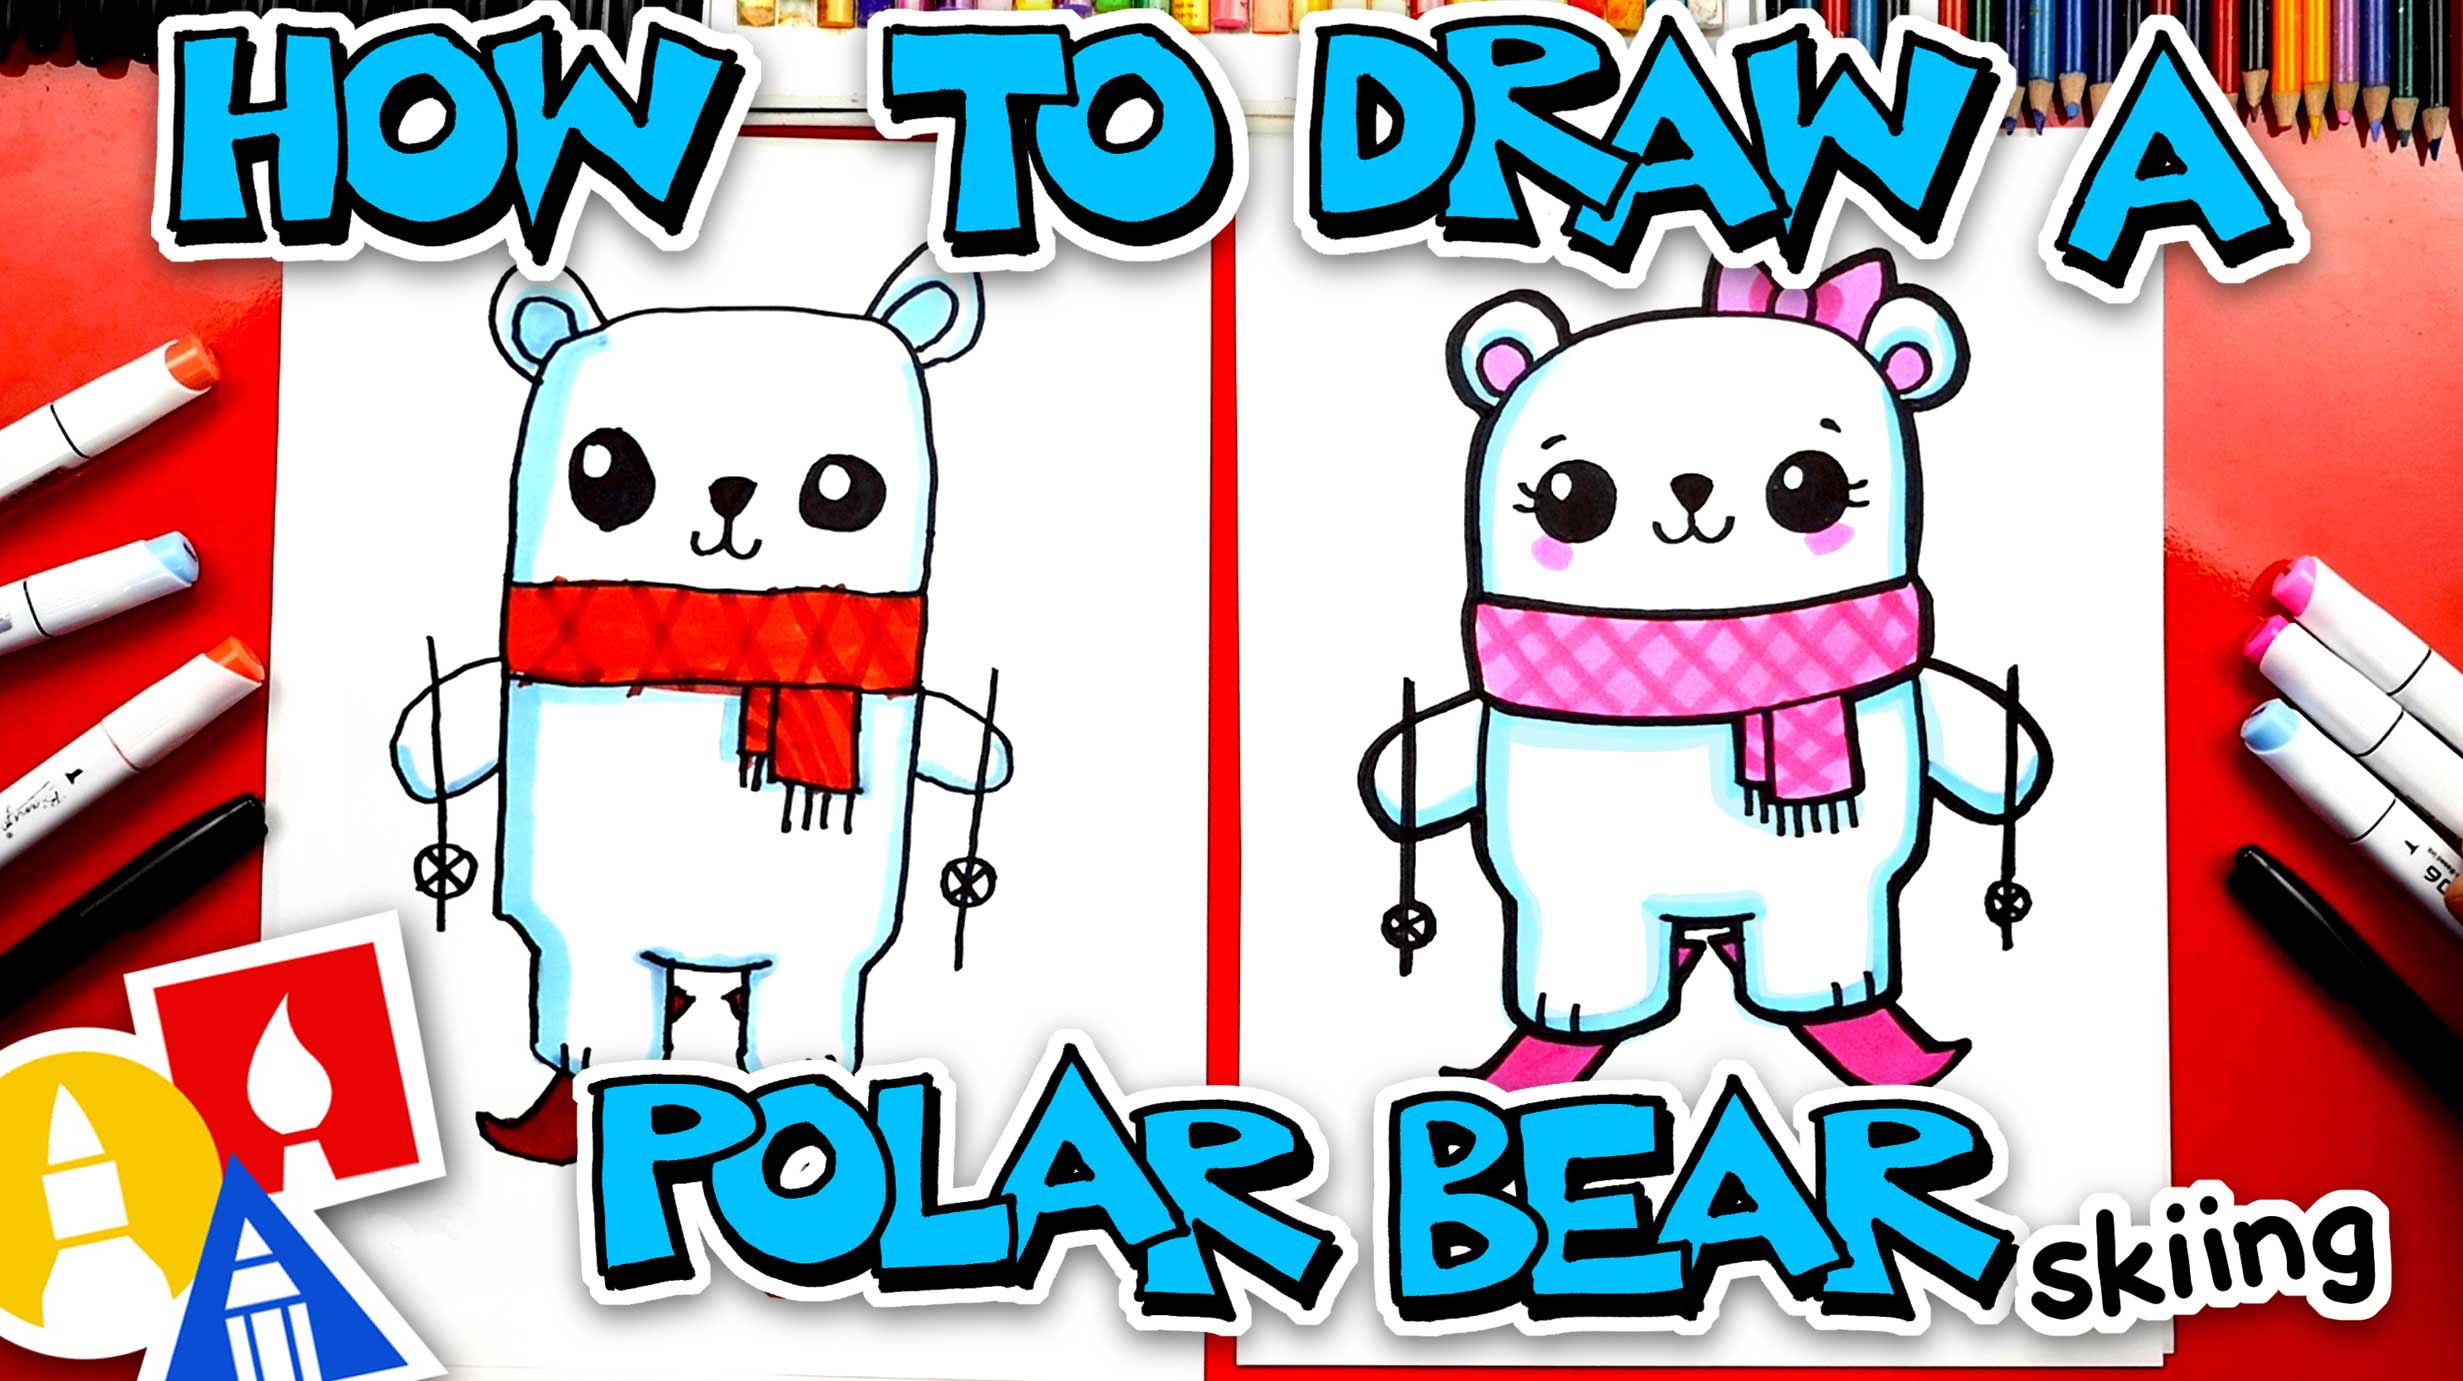 How To Draw A Funny Cartoon Polar Bear Skiing - Art For Kids Hub -